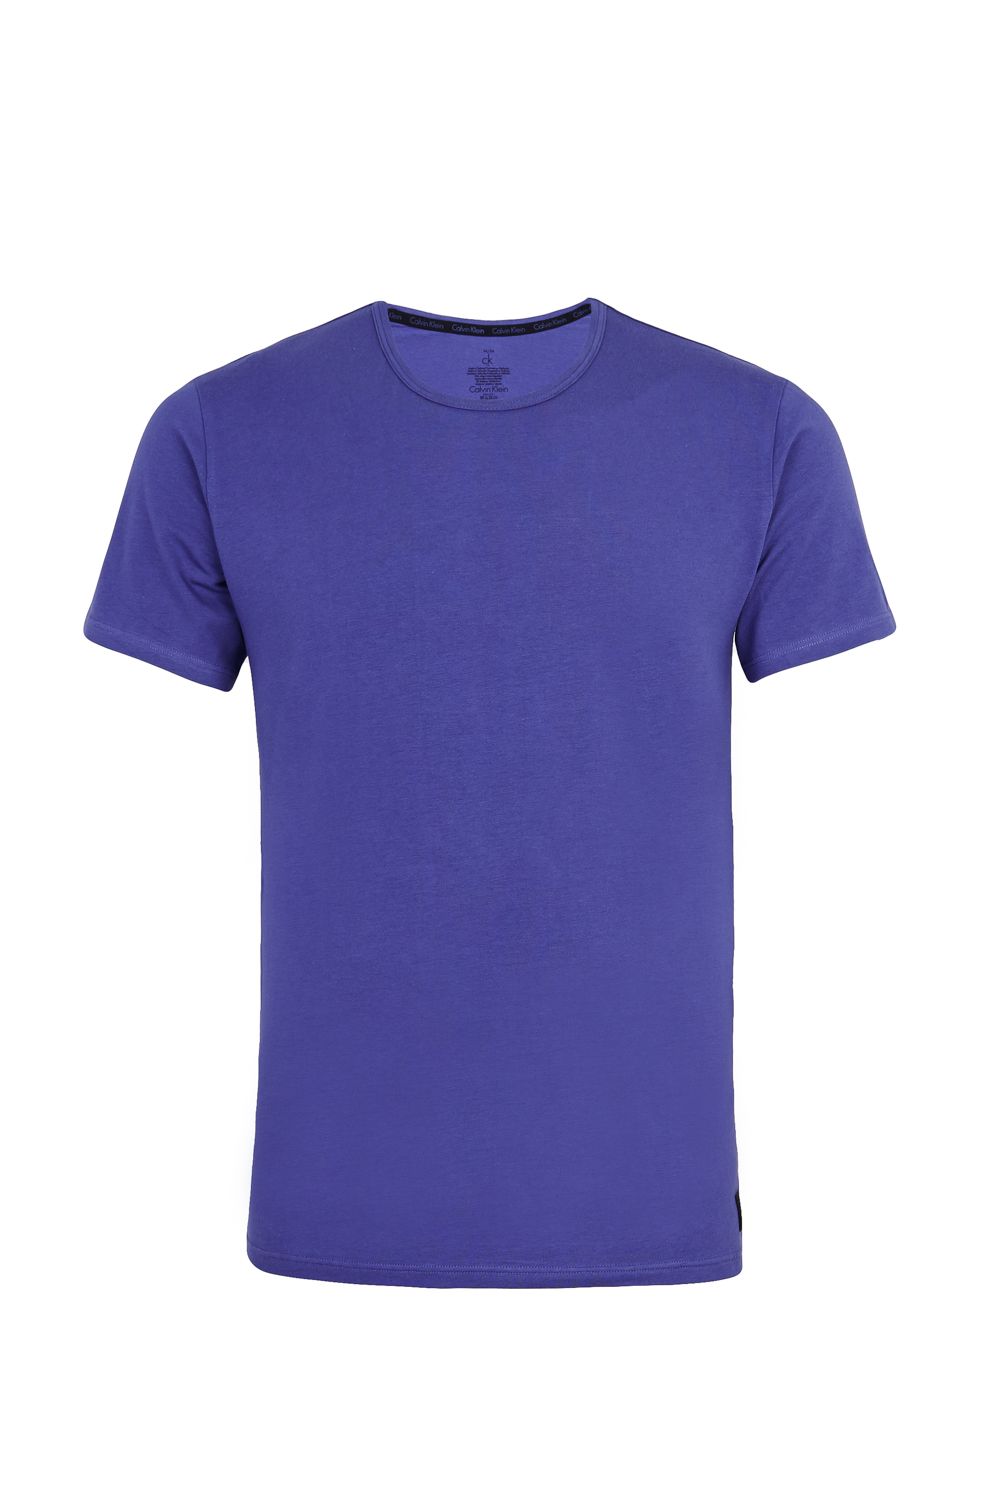 Calvin Klein Cotton Crew Neck T-Shirt Blue